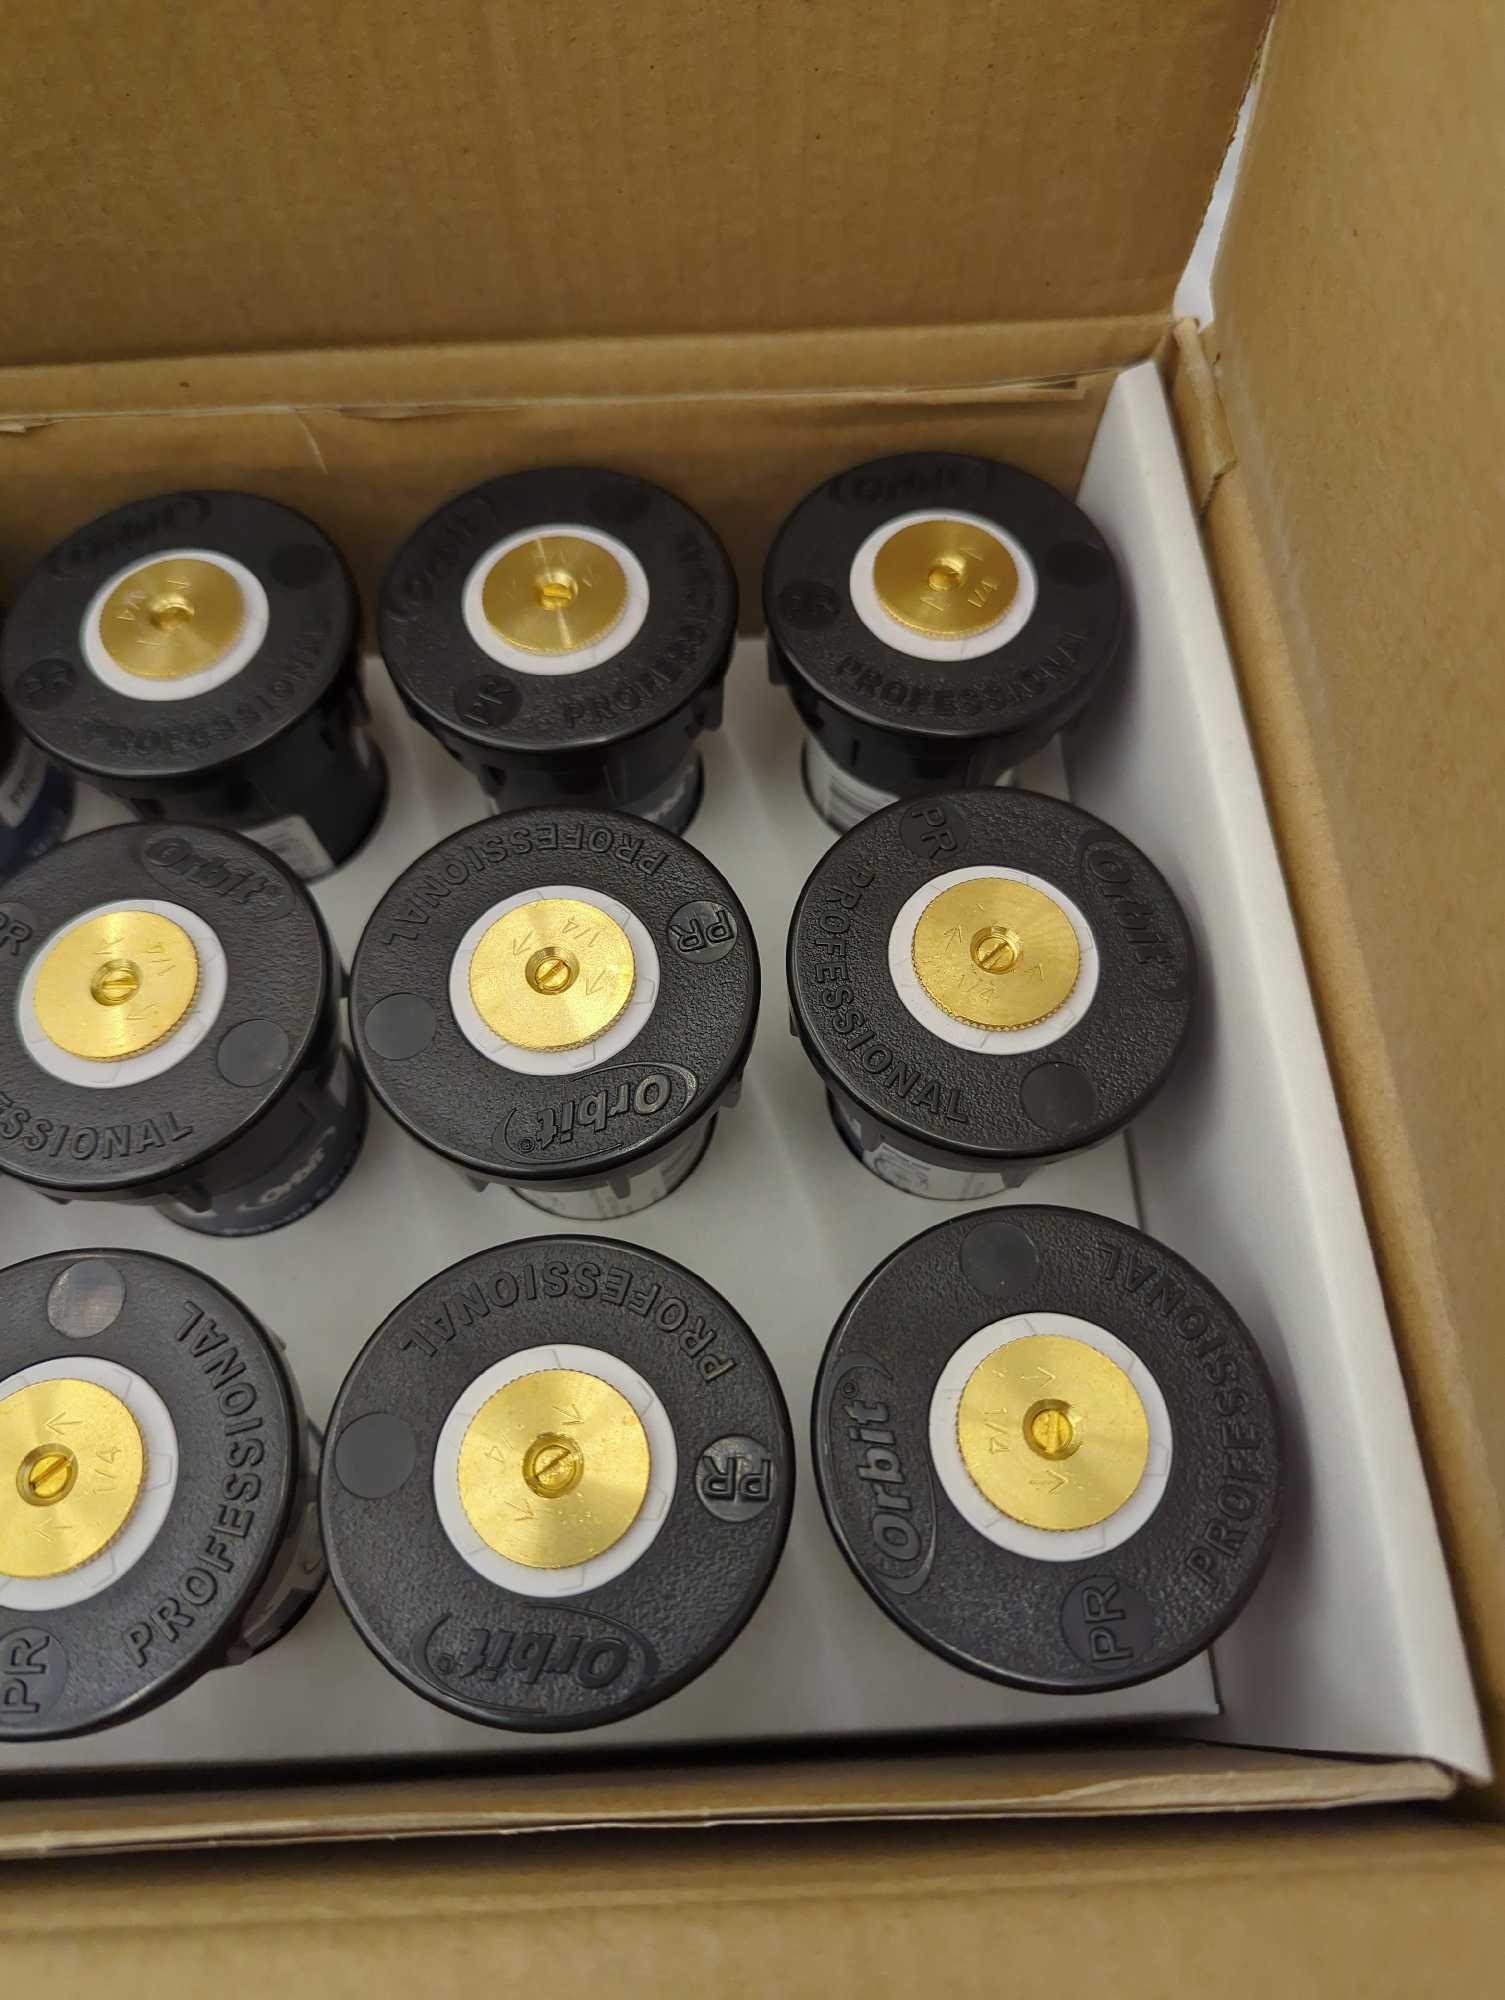 Box lot of 3 Orbit 3 in. Professional Pressure Regulated Spray Head Sprinkler with Brass Quarter